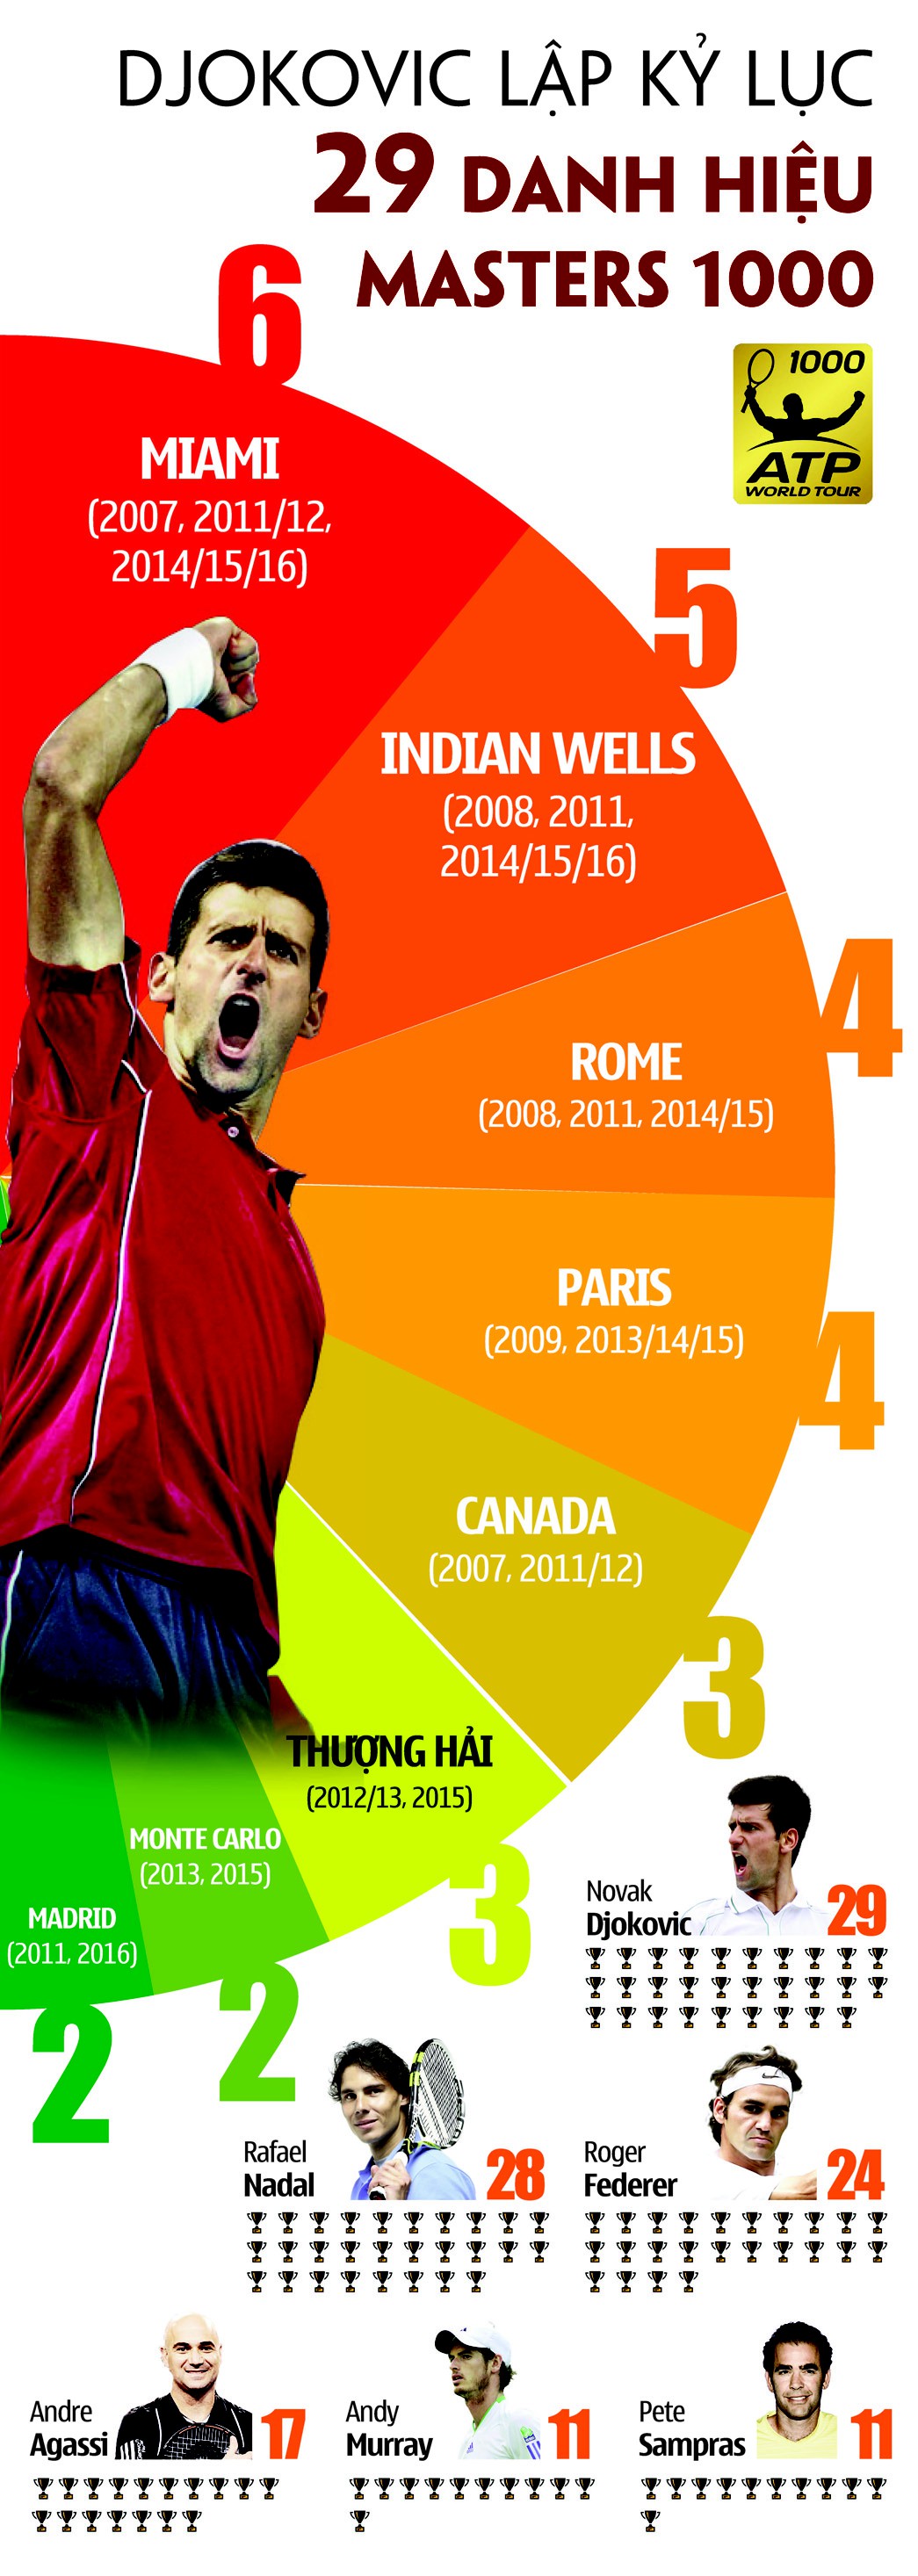 Djokovic với kỷ lục 29 danh hiệu Masters 1000